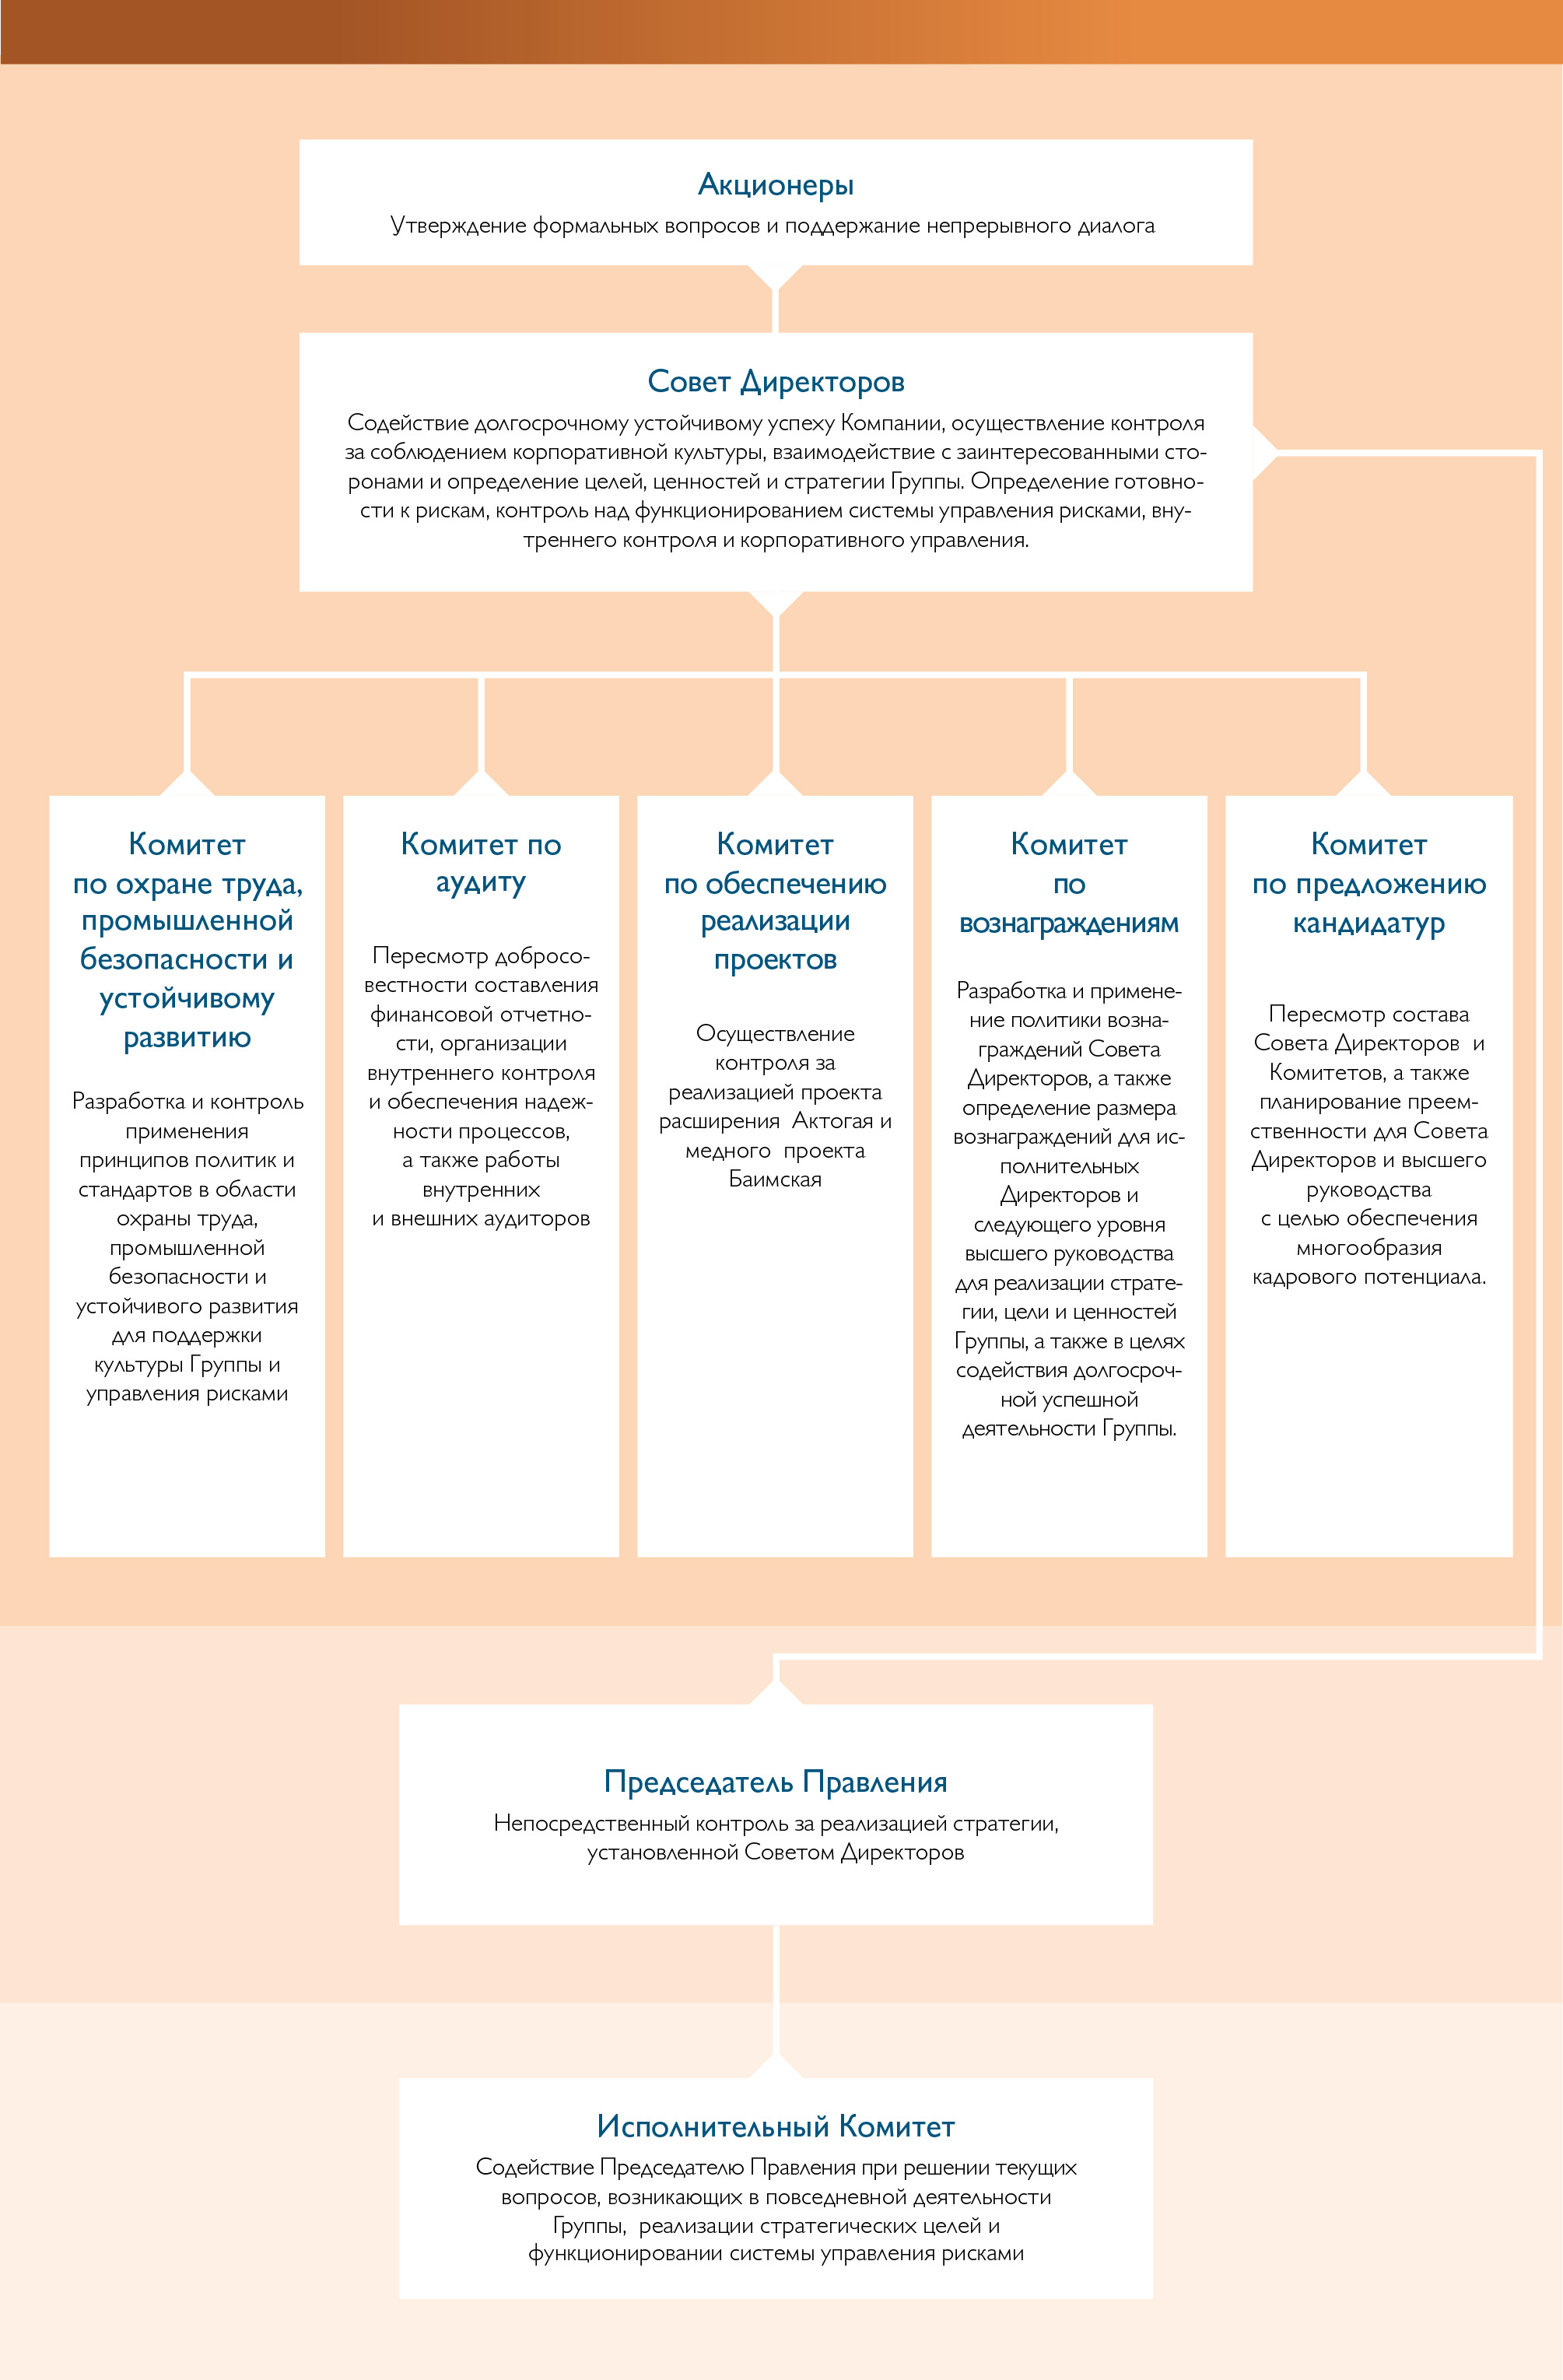 Governance Framework graphic Ru.jpg